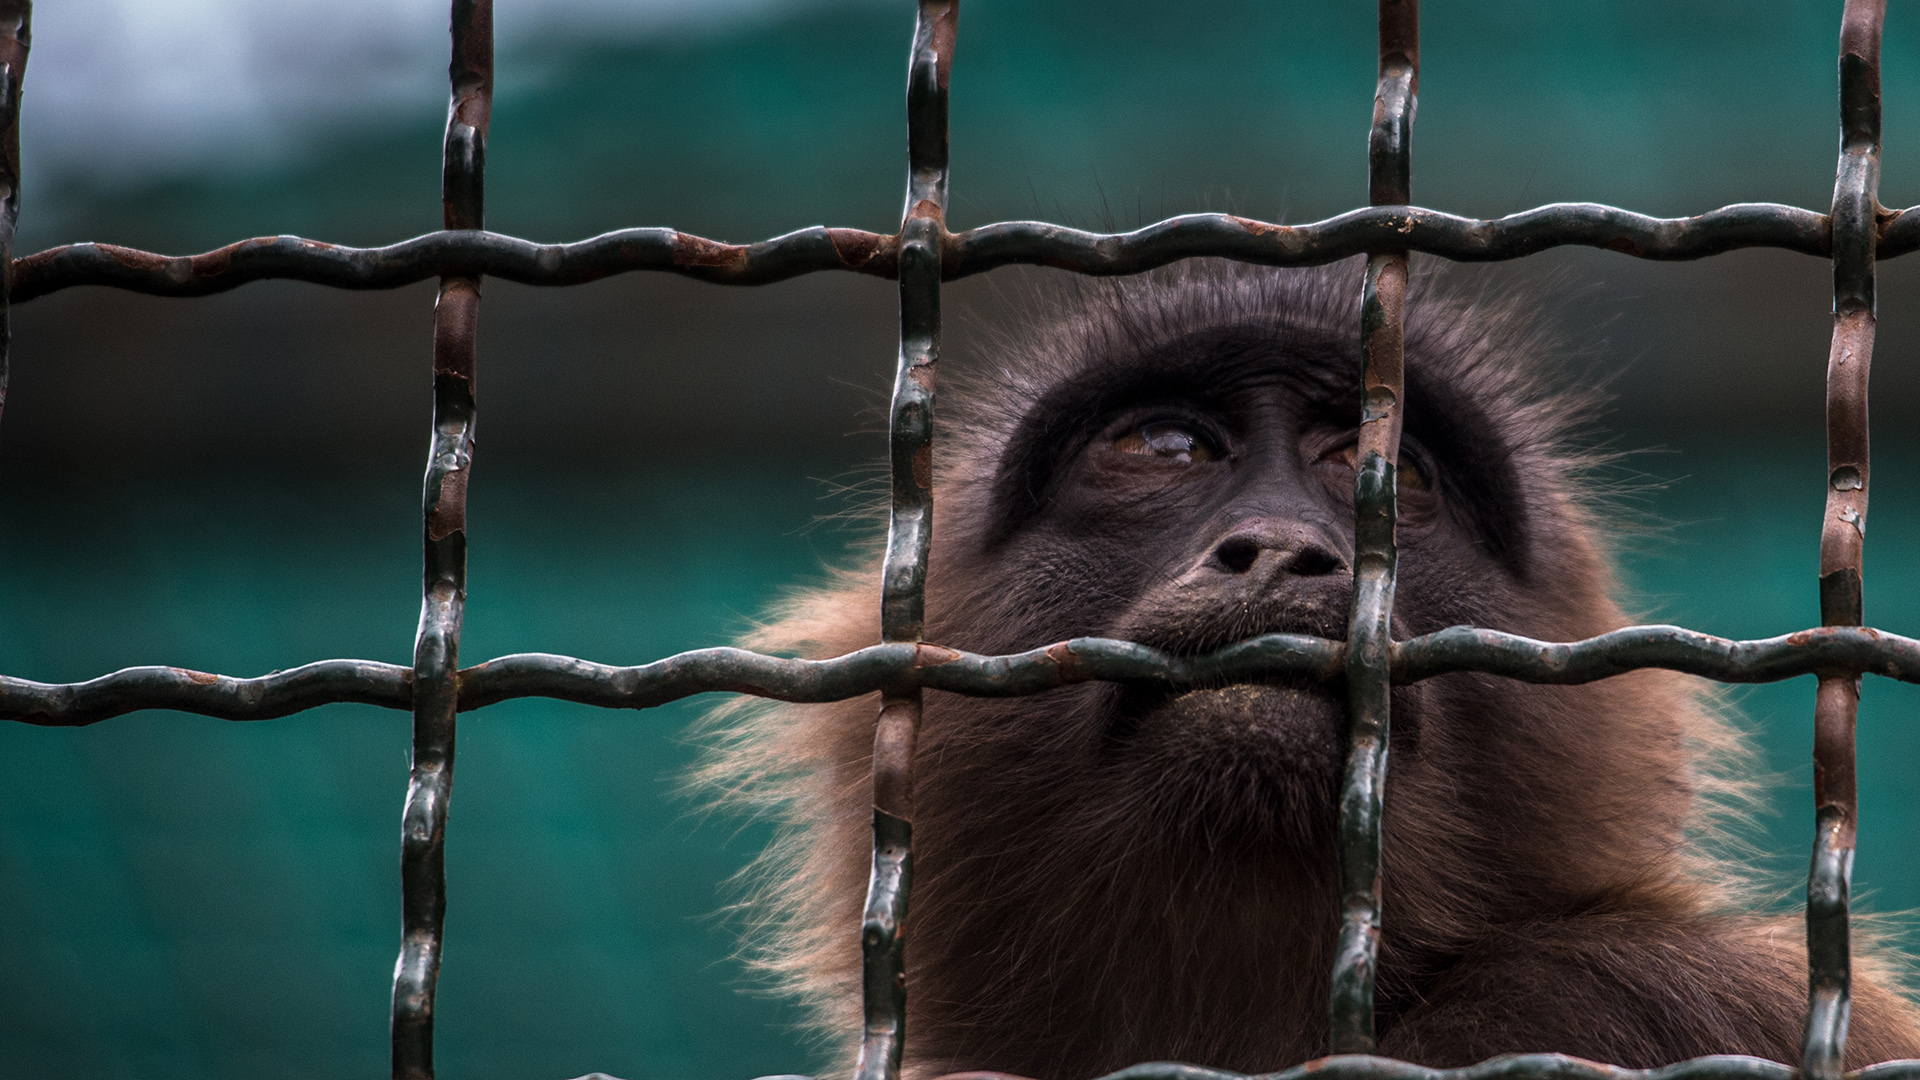 A monkey looks through metal bars